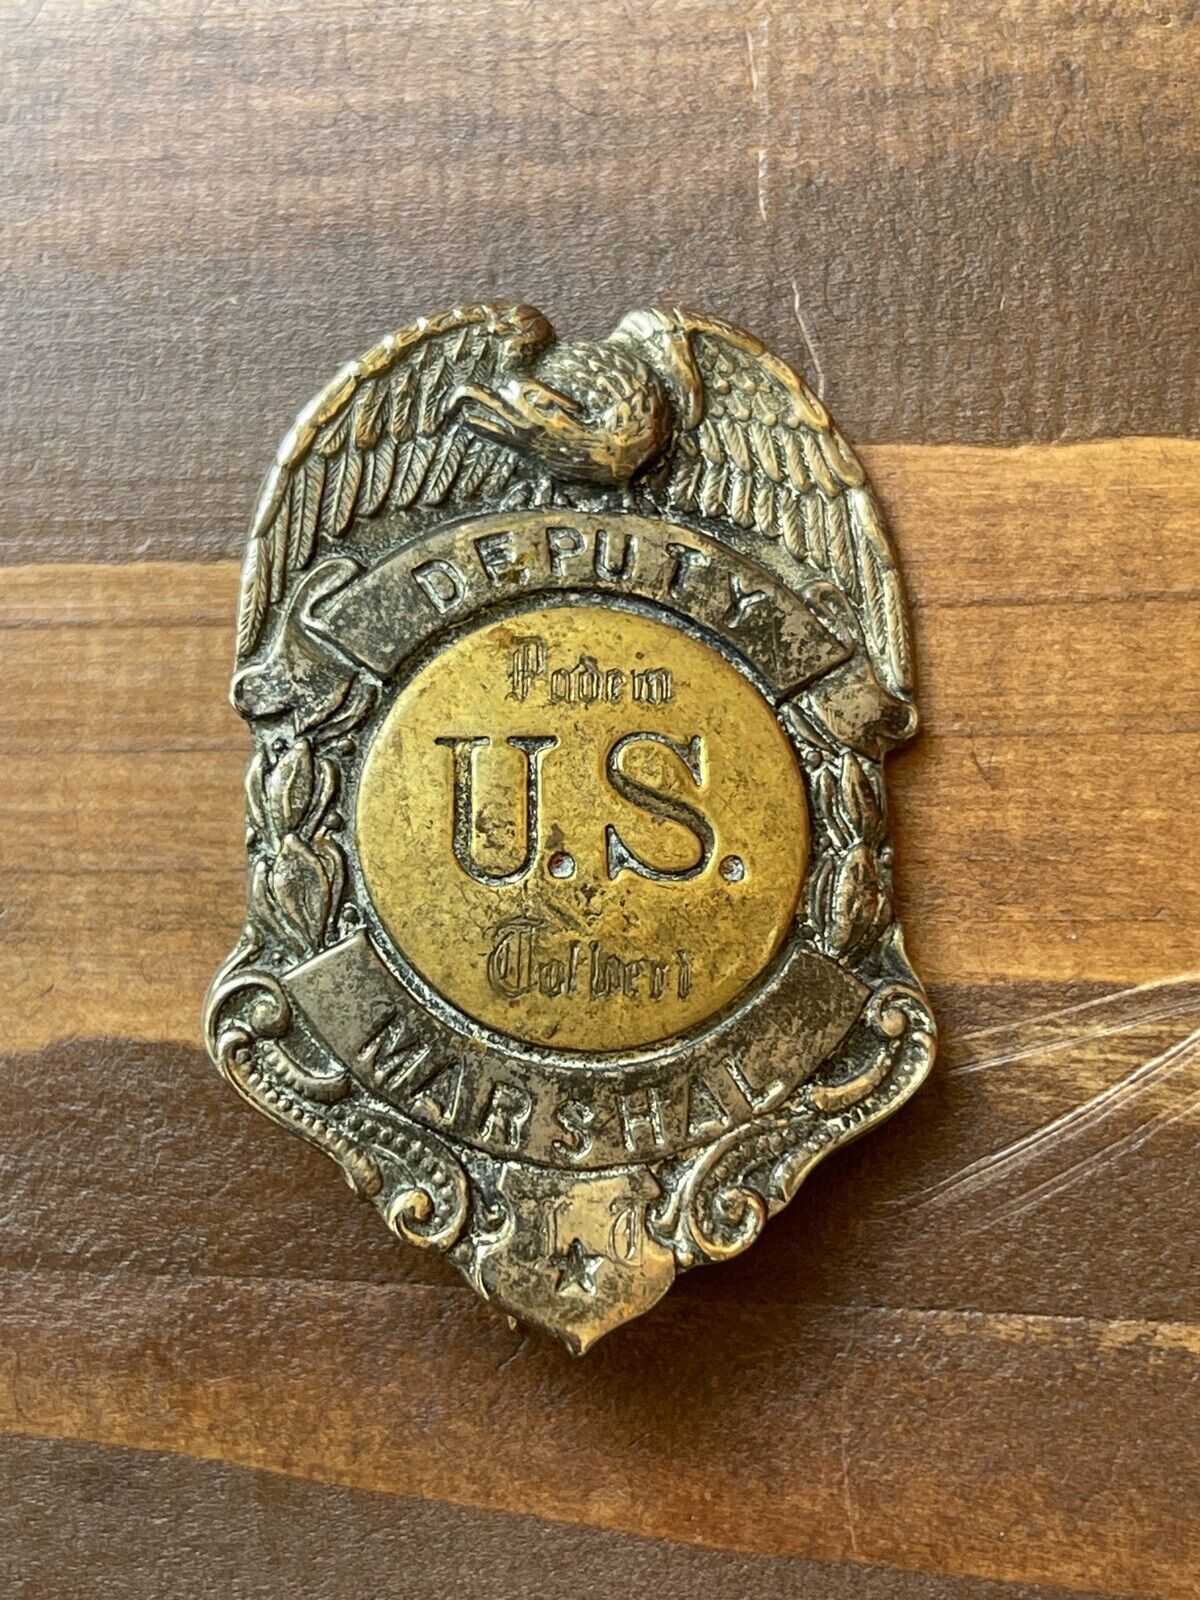 US Deputy Marshal Inscribed Badge